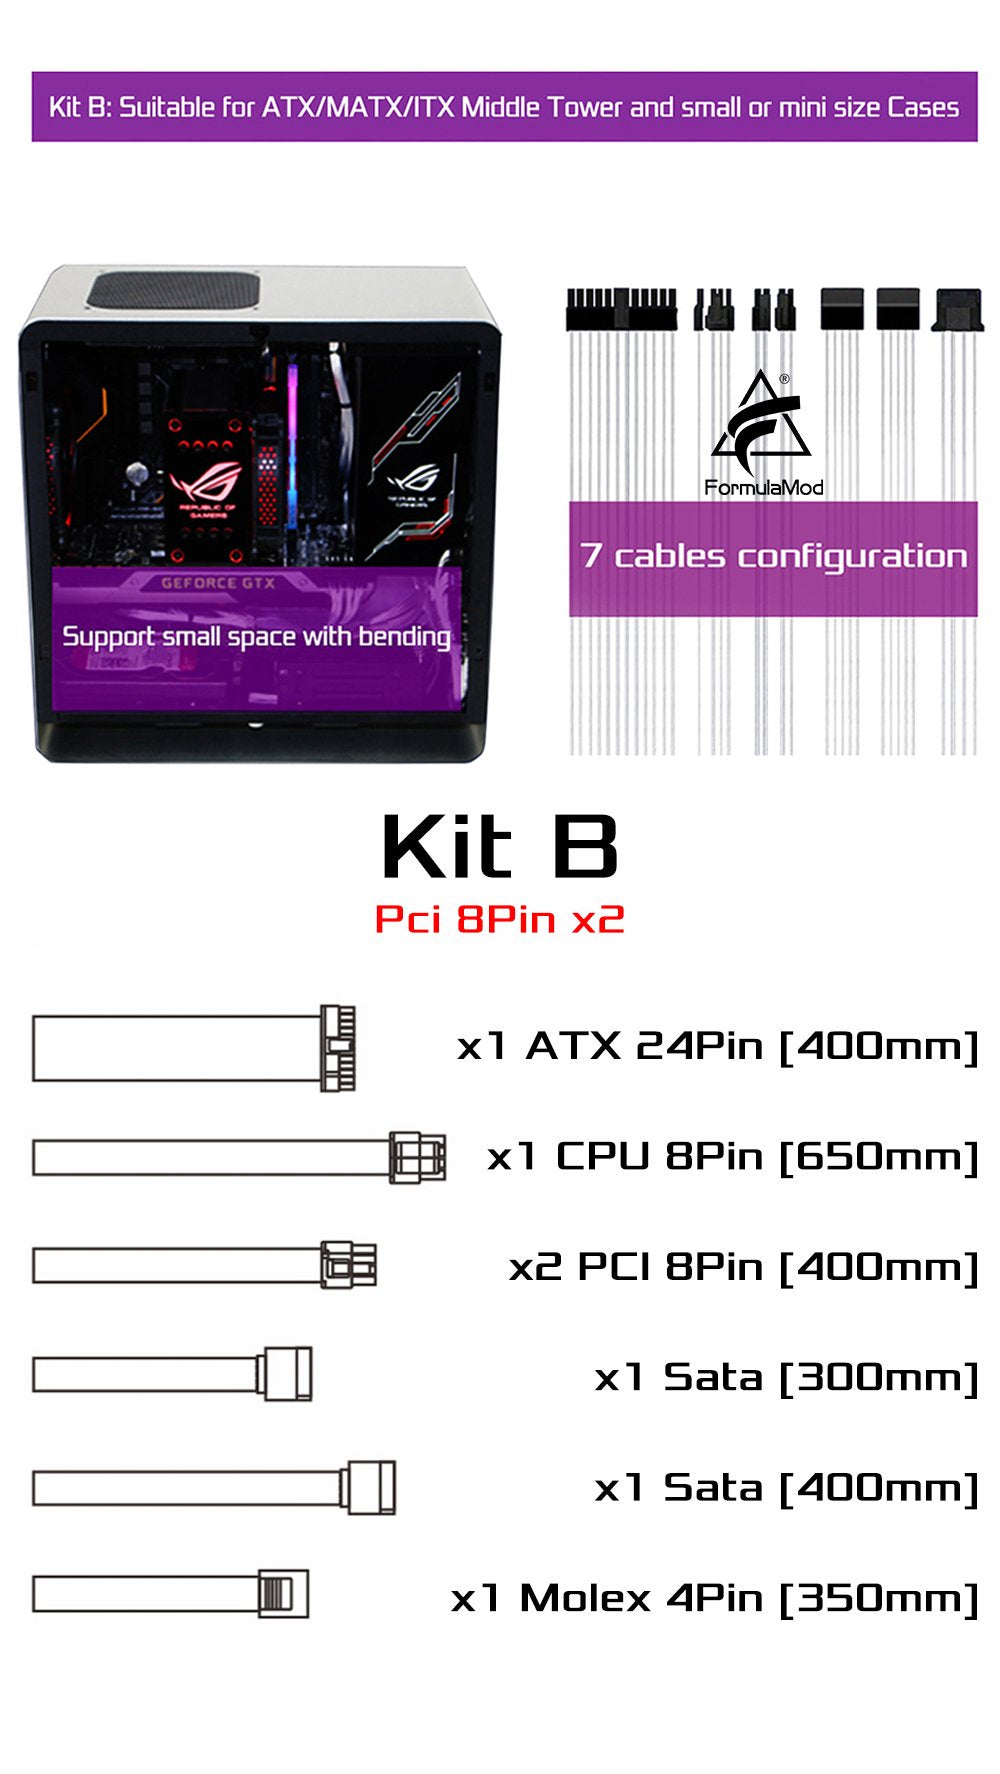 FormulaMod ASUS/Seasonic/Antec Fully Modular PSU Cable Kit, 18AWG Sleeved, Kit For ASUS/Seasonic/Antec Modular PSU, Fm-BZXZ [Please check compatibility]